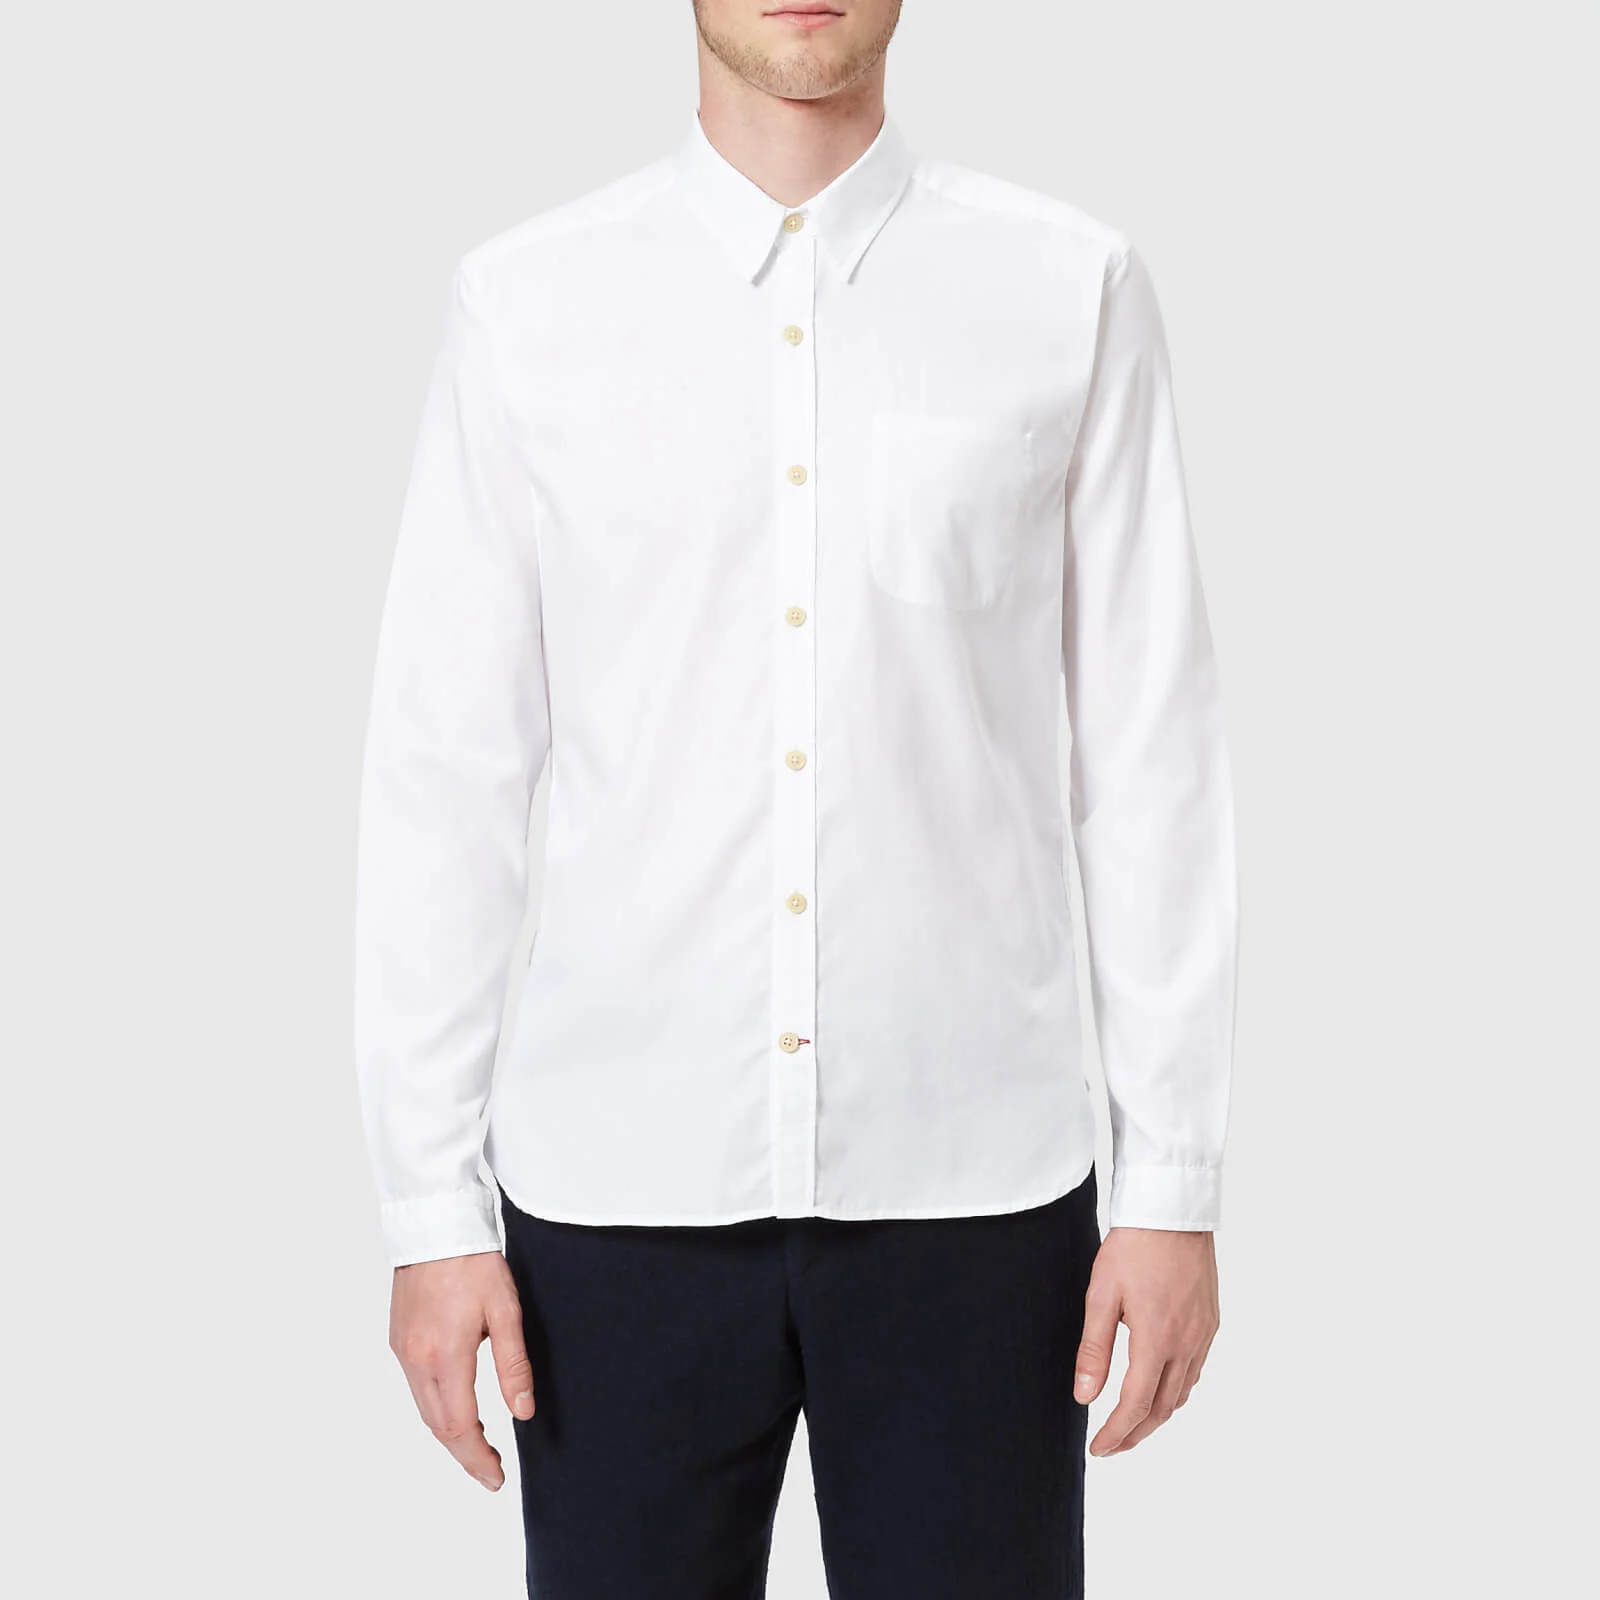 Oliver Spencer Men's New York Special Shirt - Astley White Image 1